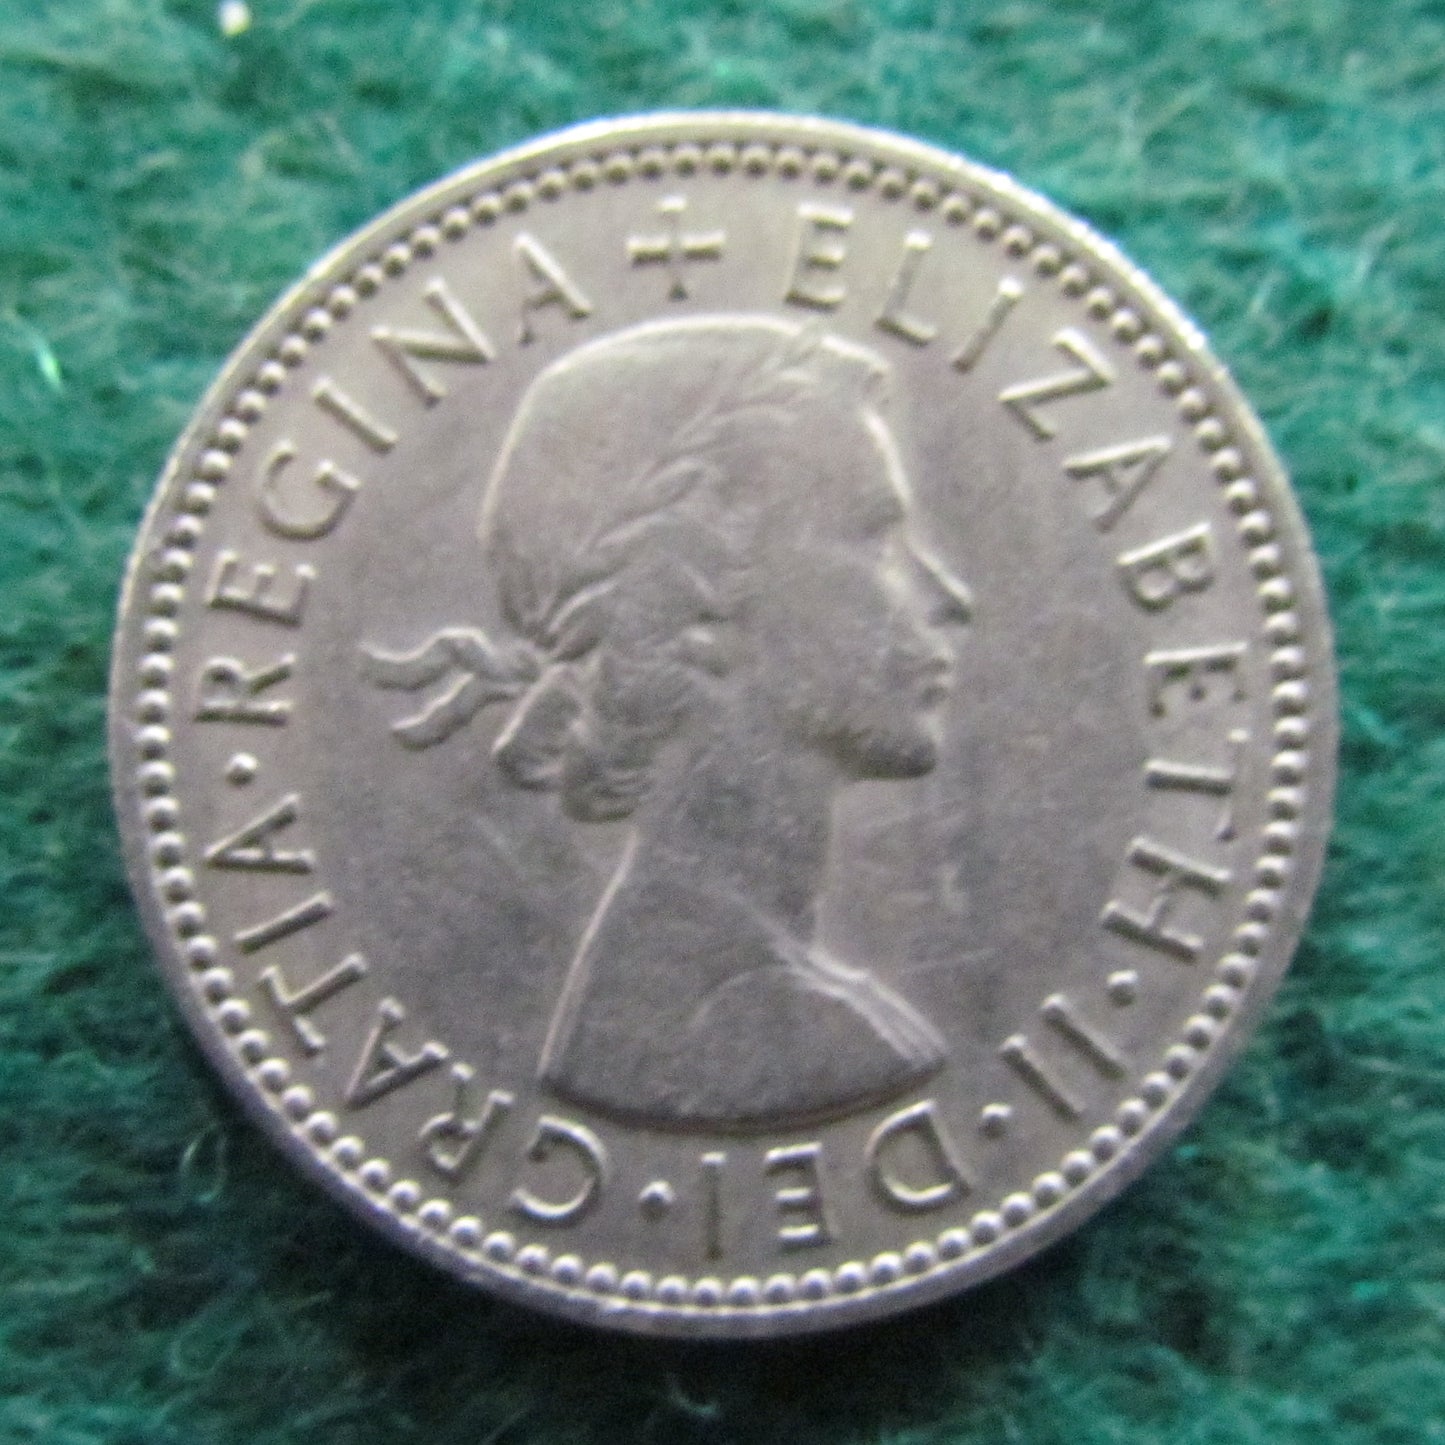 GB British UK English 1958 1 Shilling Queen Elizabeth II Coin